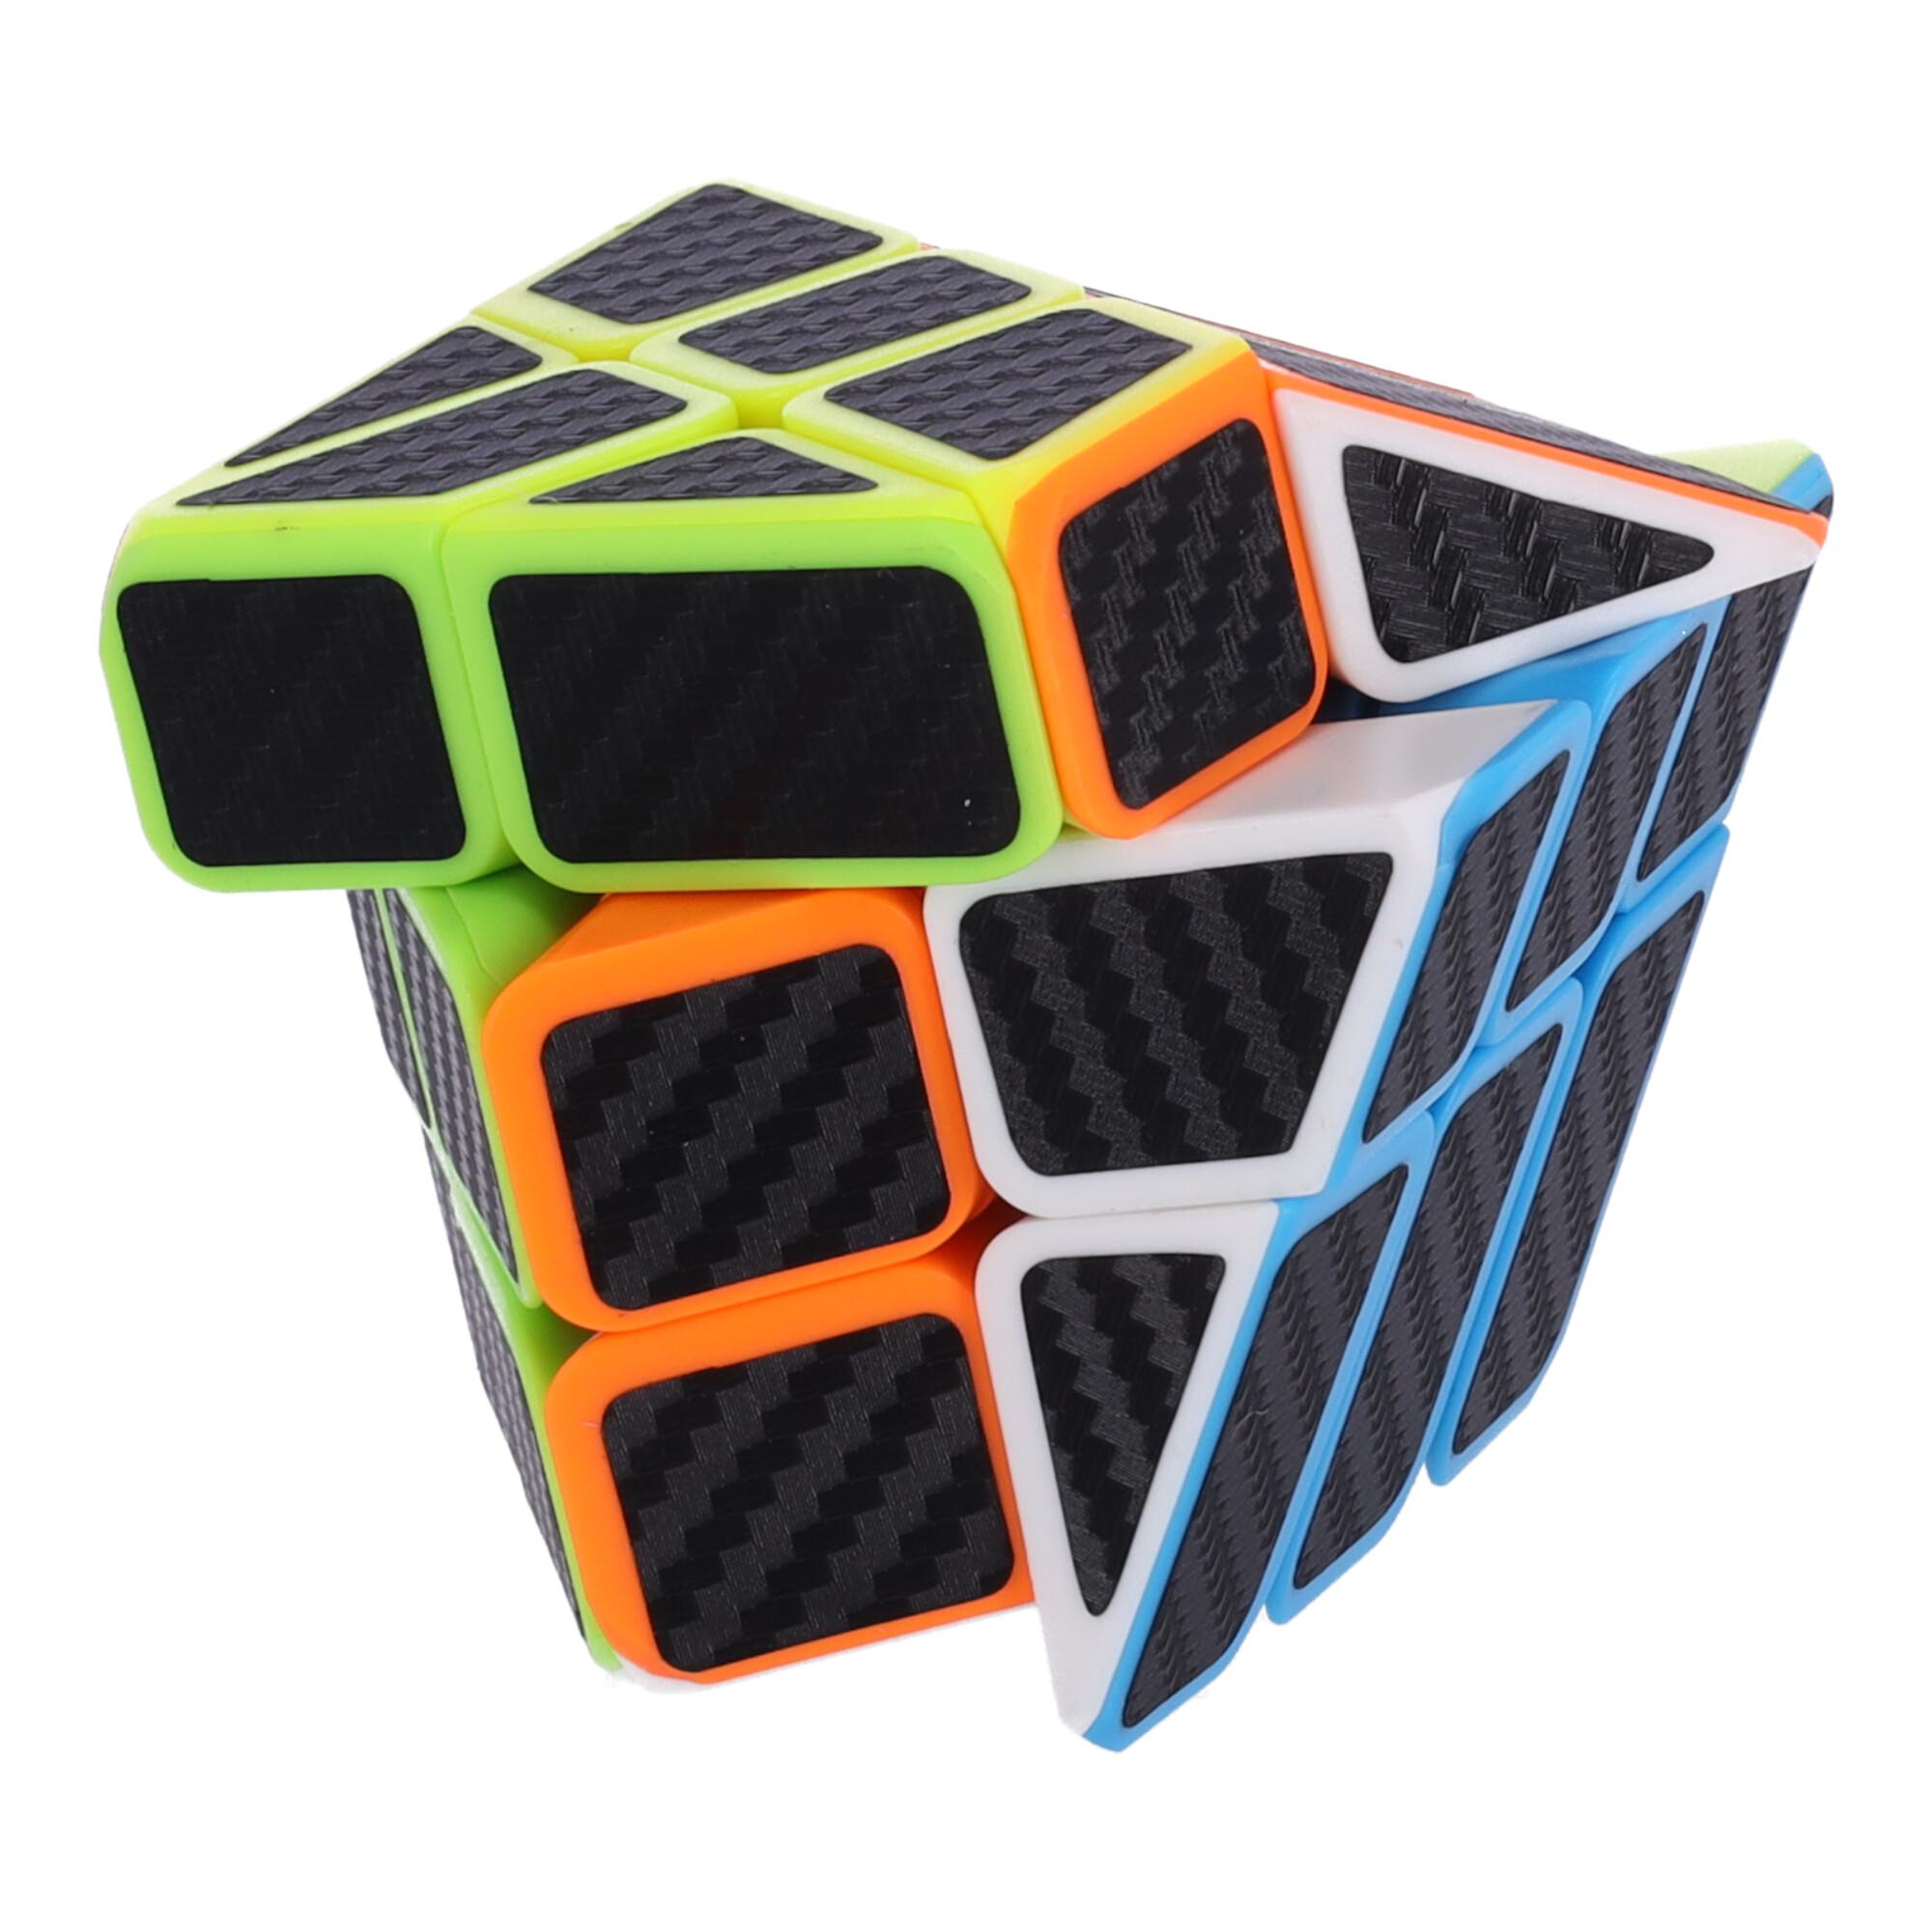 Modern jigsaw puzzle, logic cube, Rubik's Cube - Hot Wheels, type I